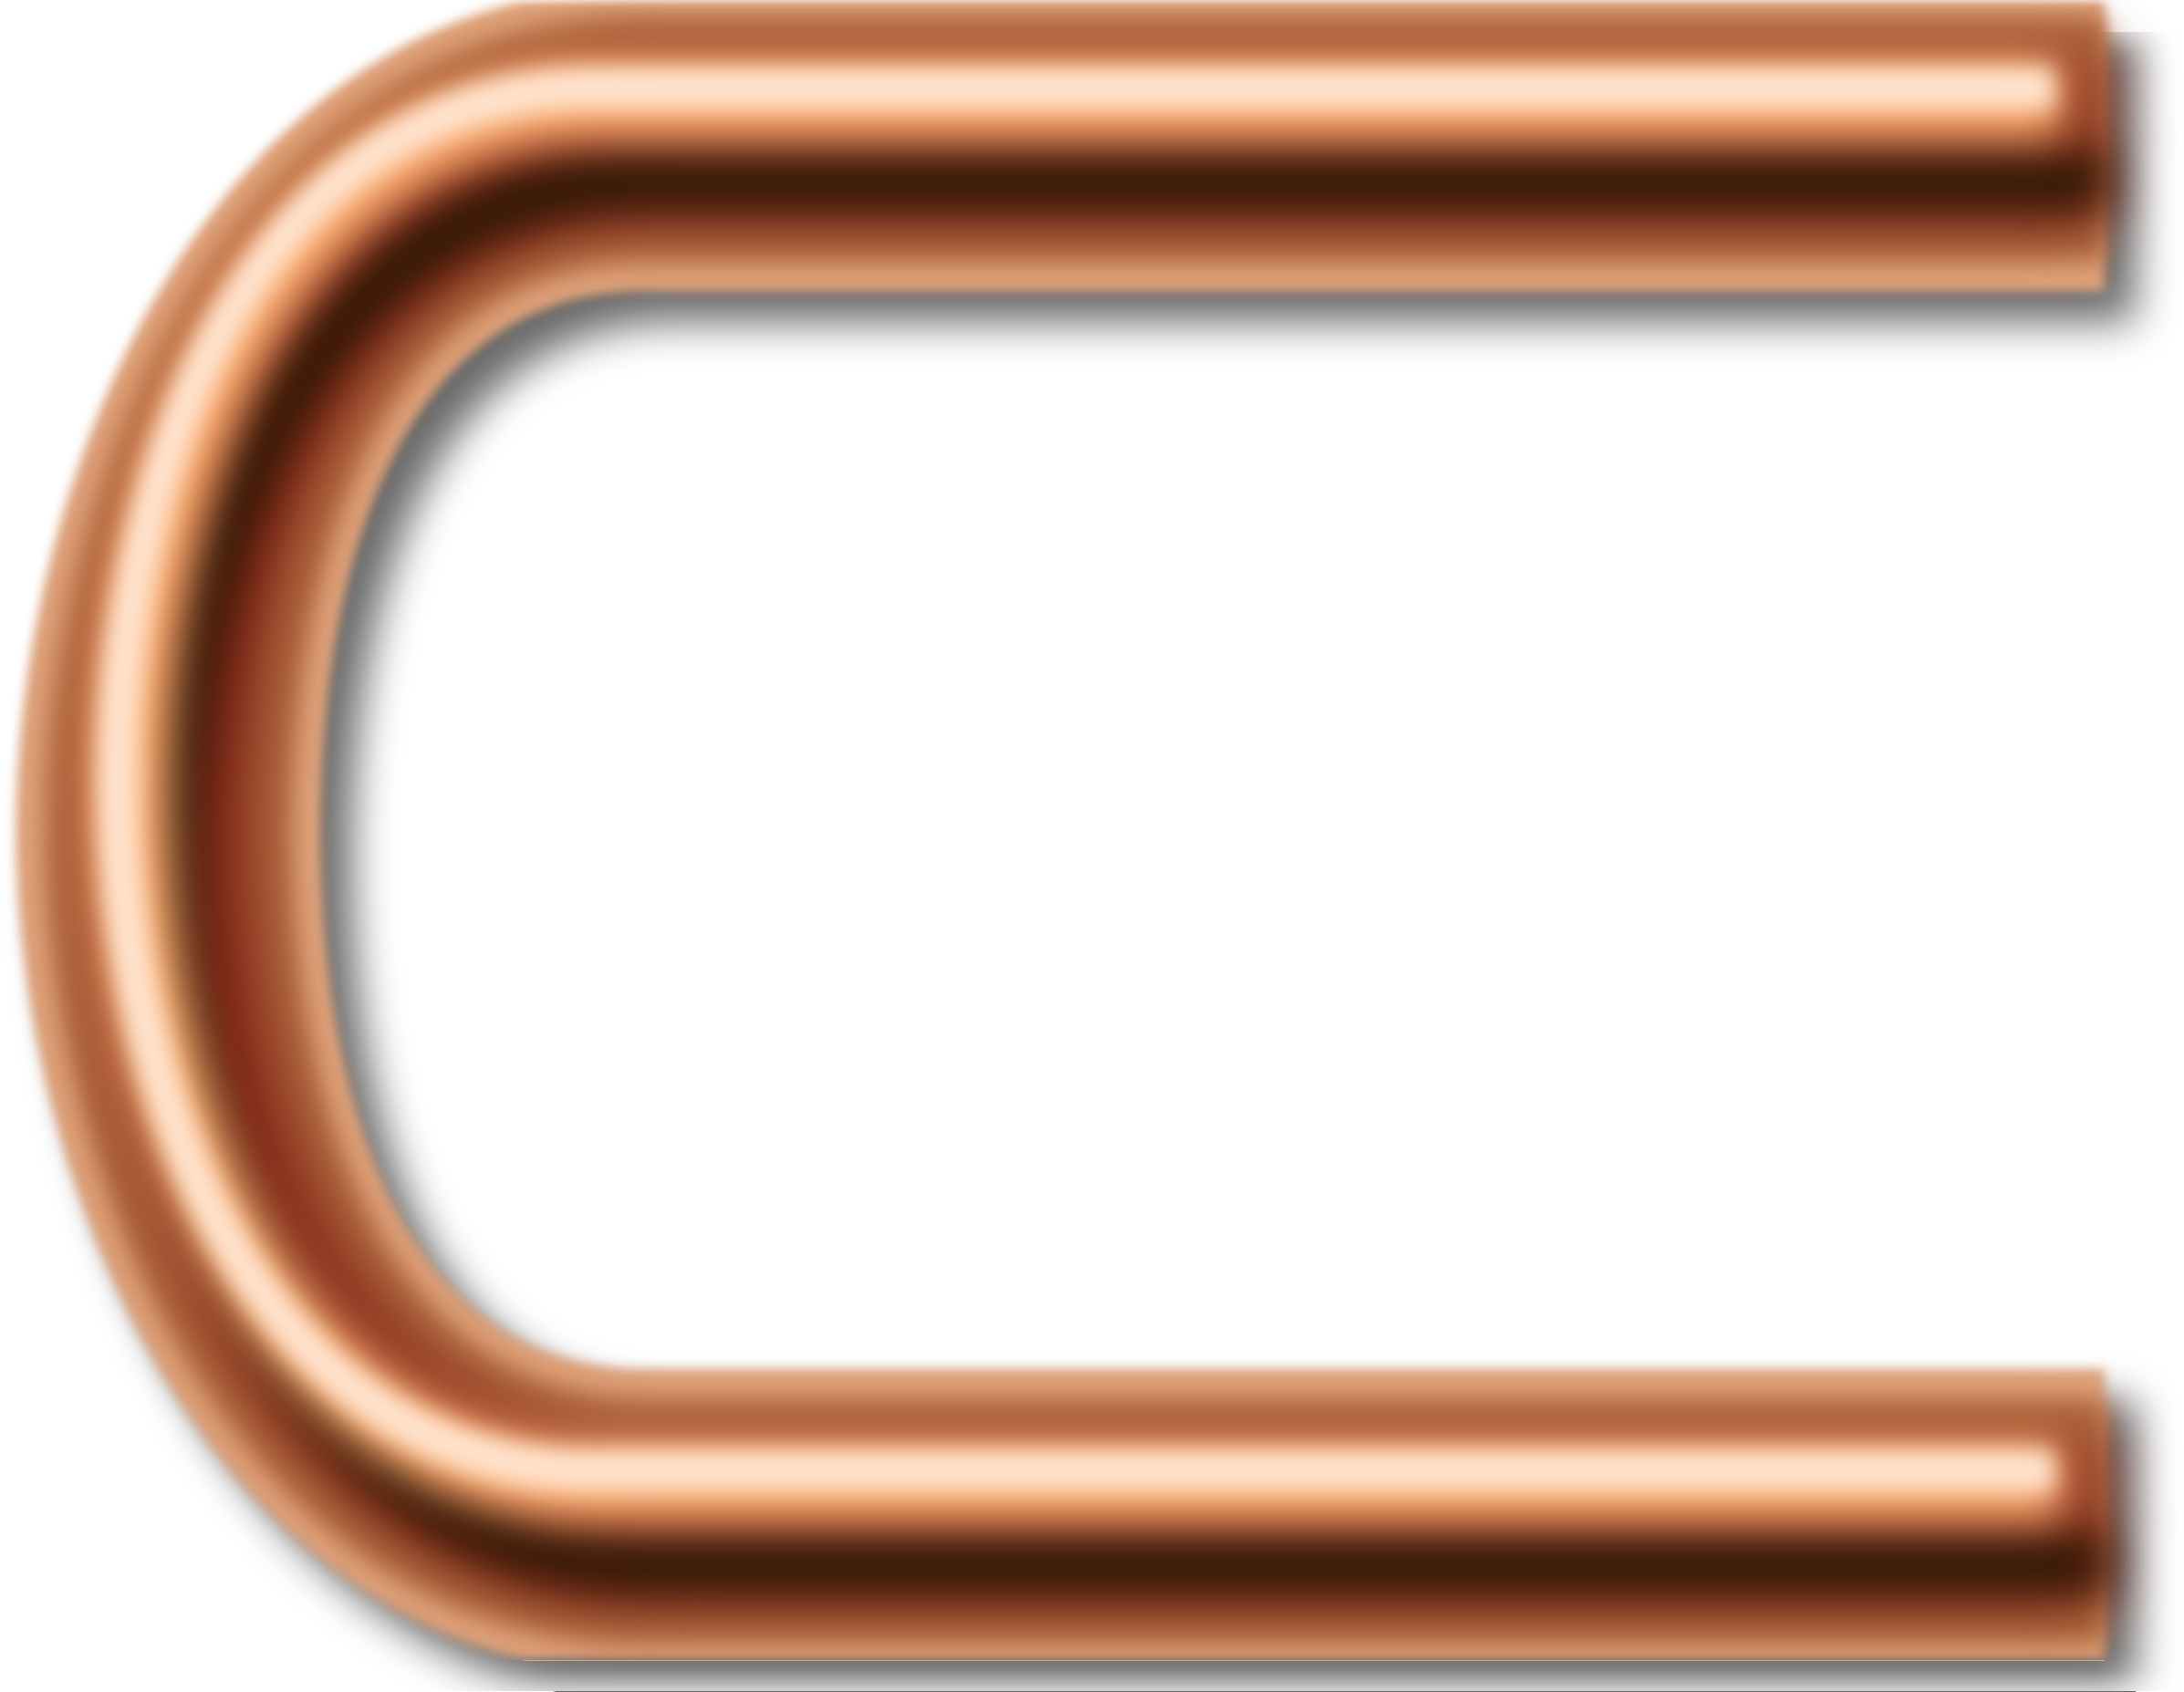 Copper Pipe - Copper Tubing (2394x1855)